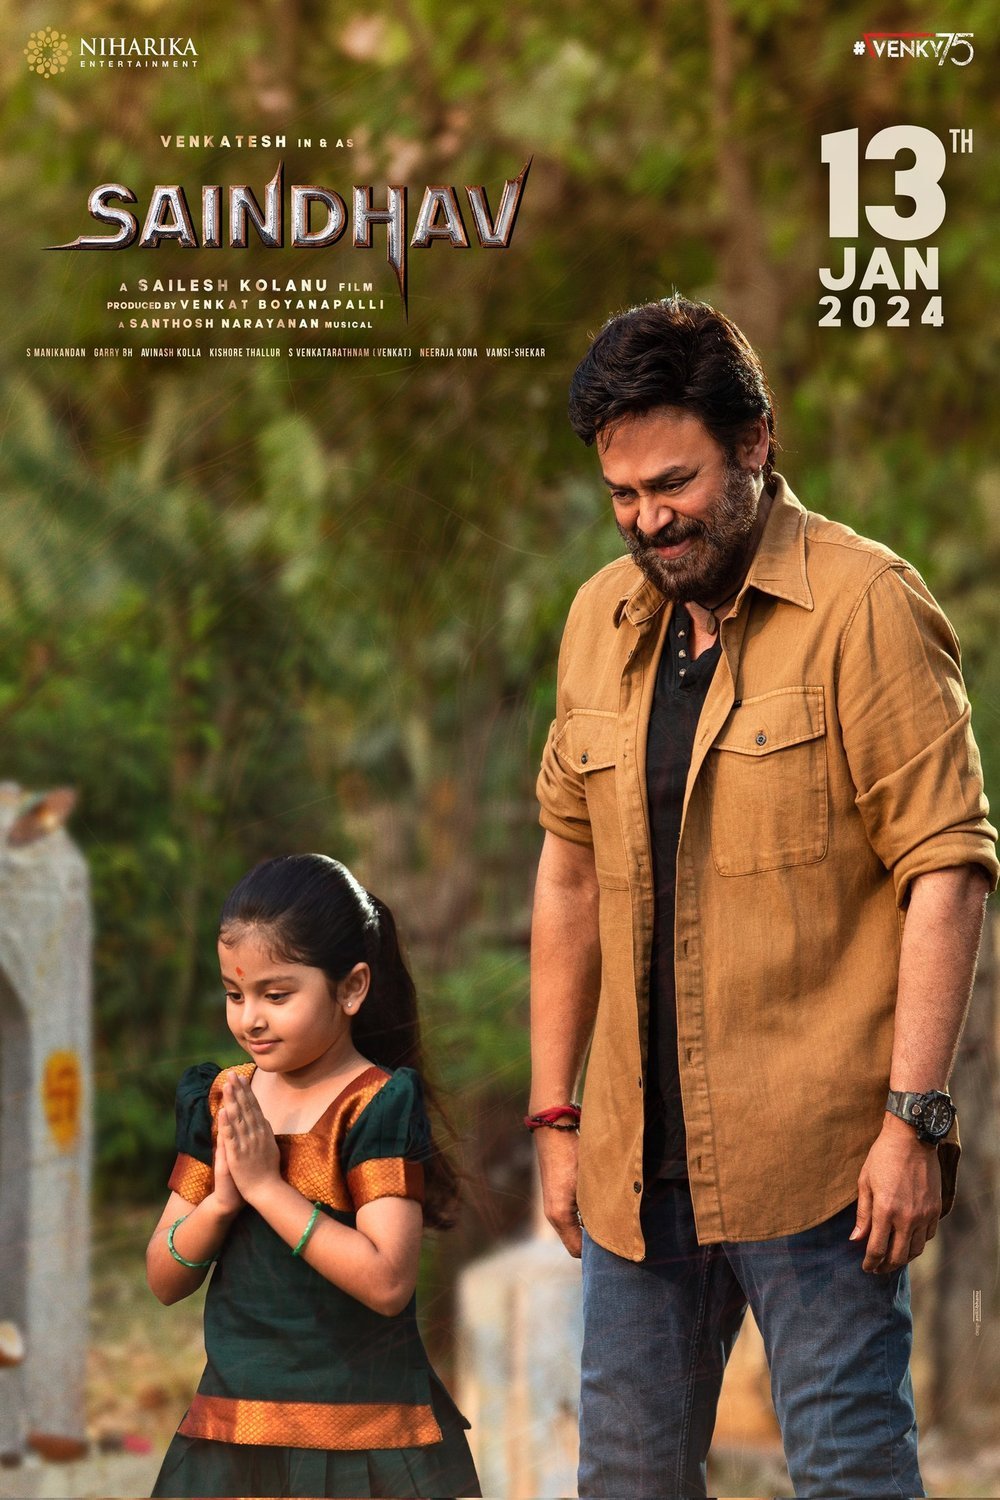 Telugu poster of the movie Saindhav